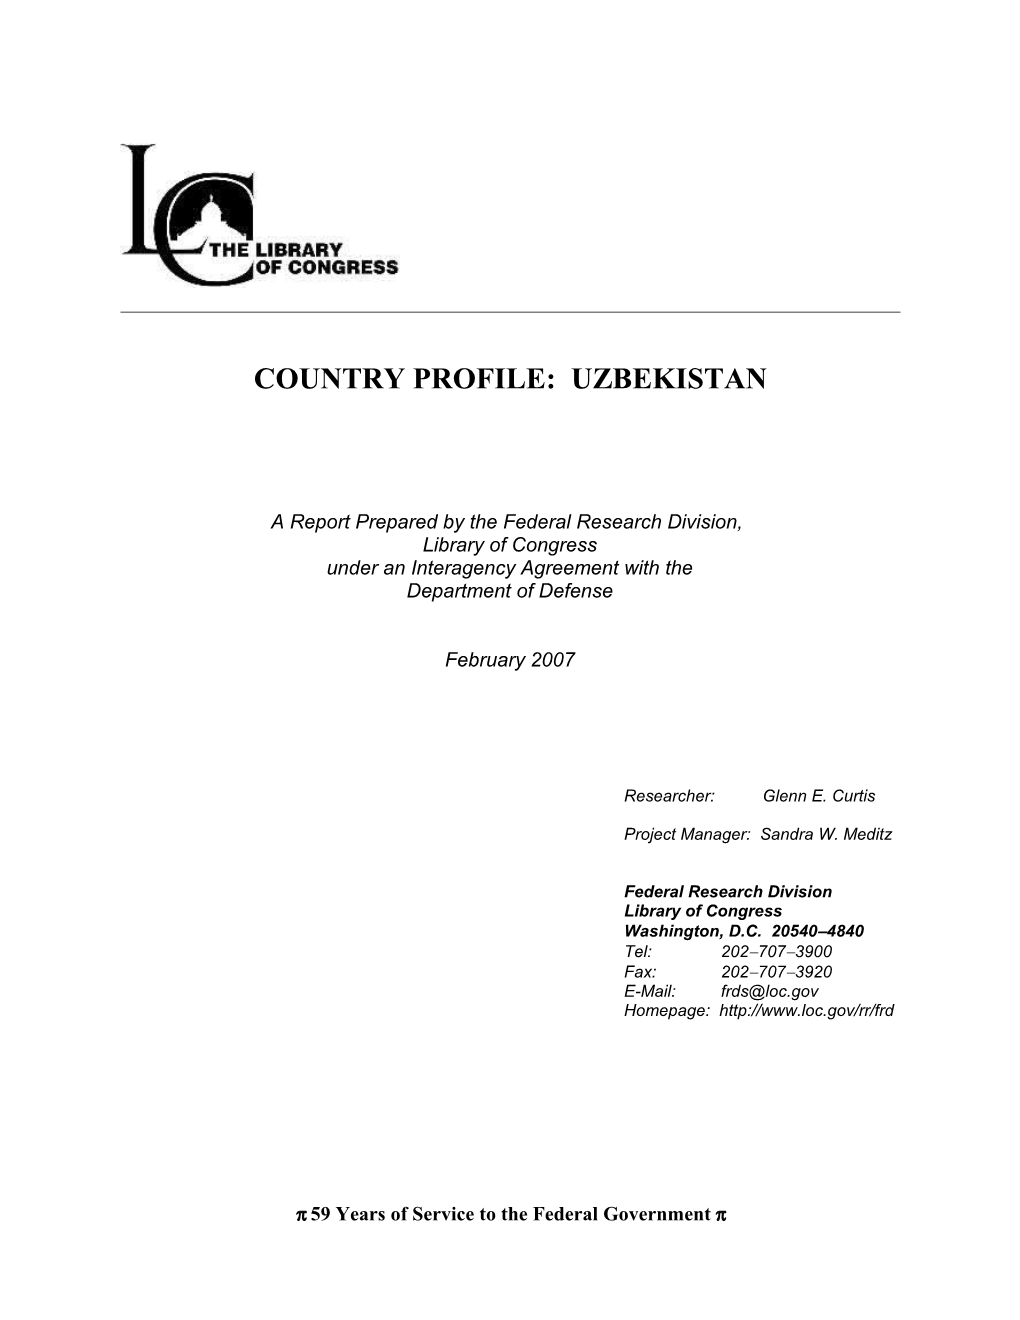 Country Profile: Uzbekistan